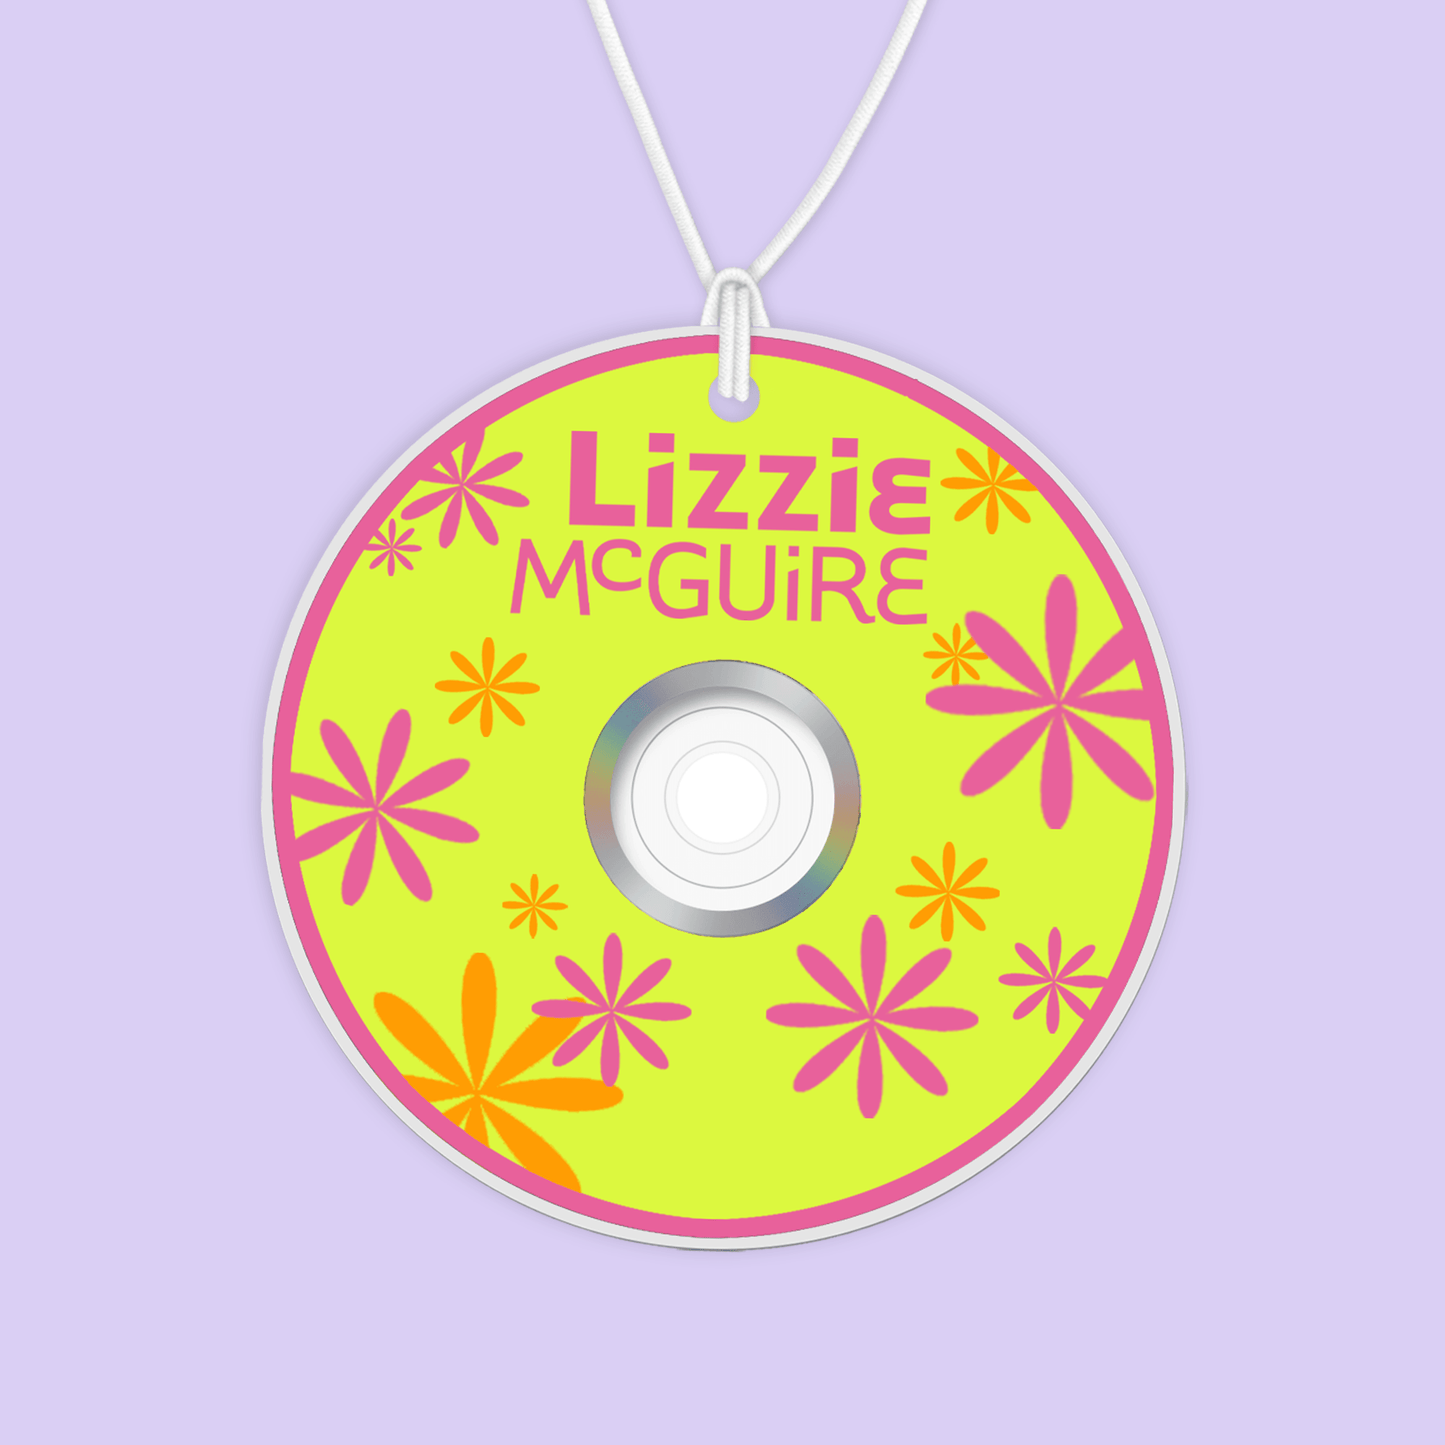 Lizzie McGuire CD Air Freshener - Two Crafty Gays